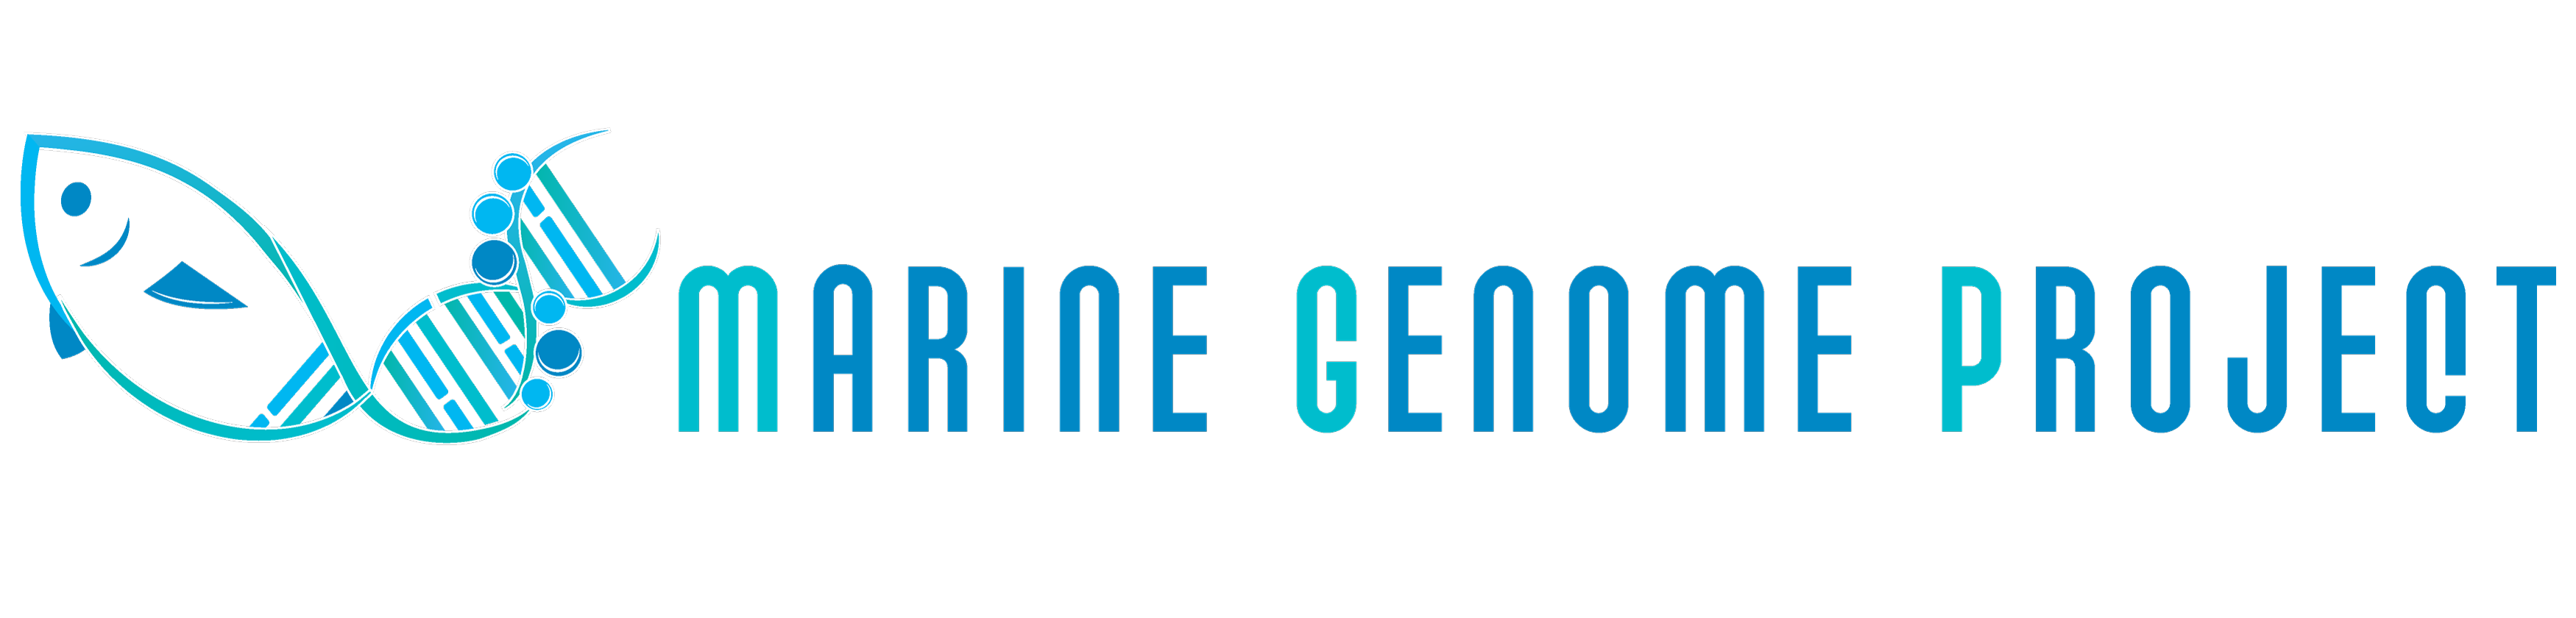 Marine Genome Project logo